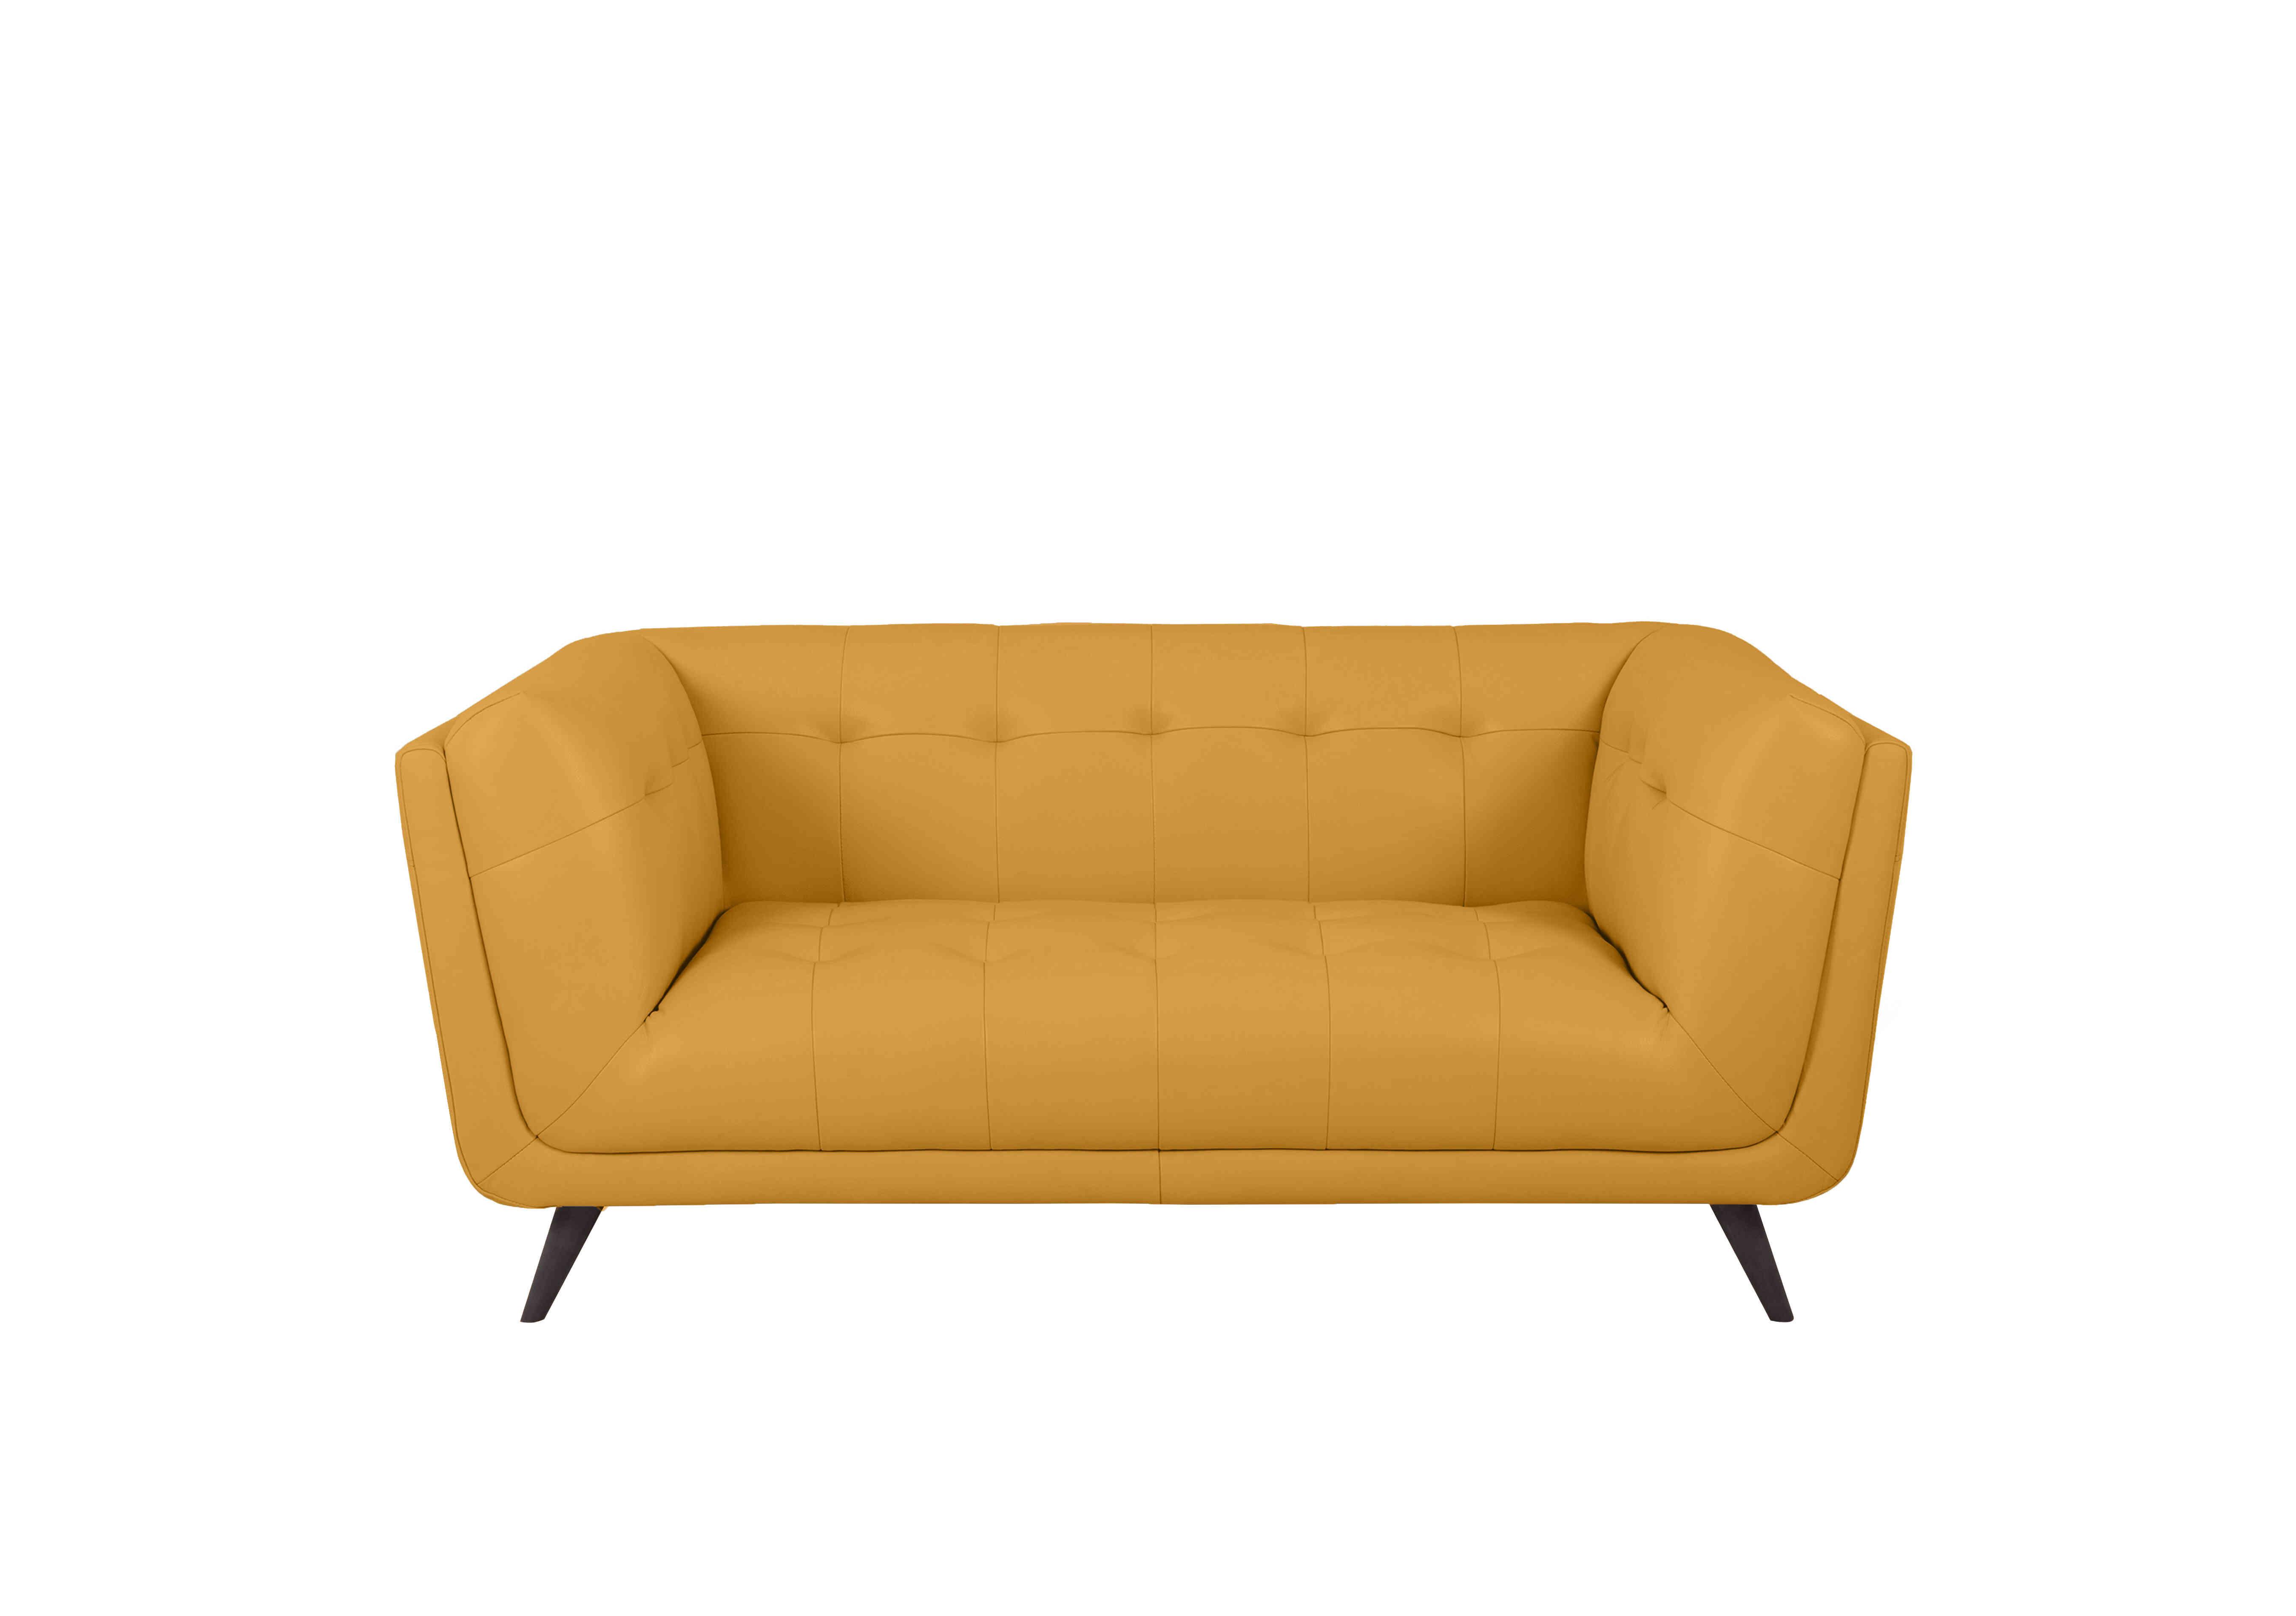 Rene 2 Seater Leather Sofa in Florida Sunburst on Furniture Village